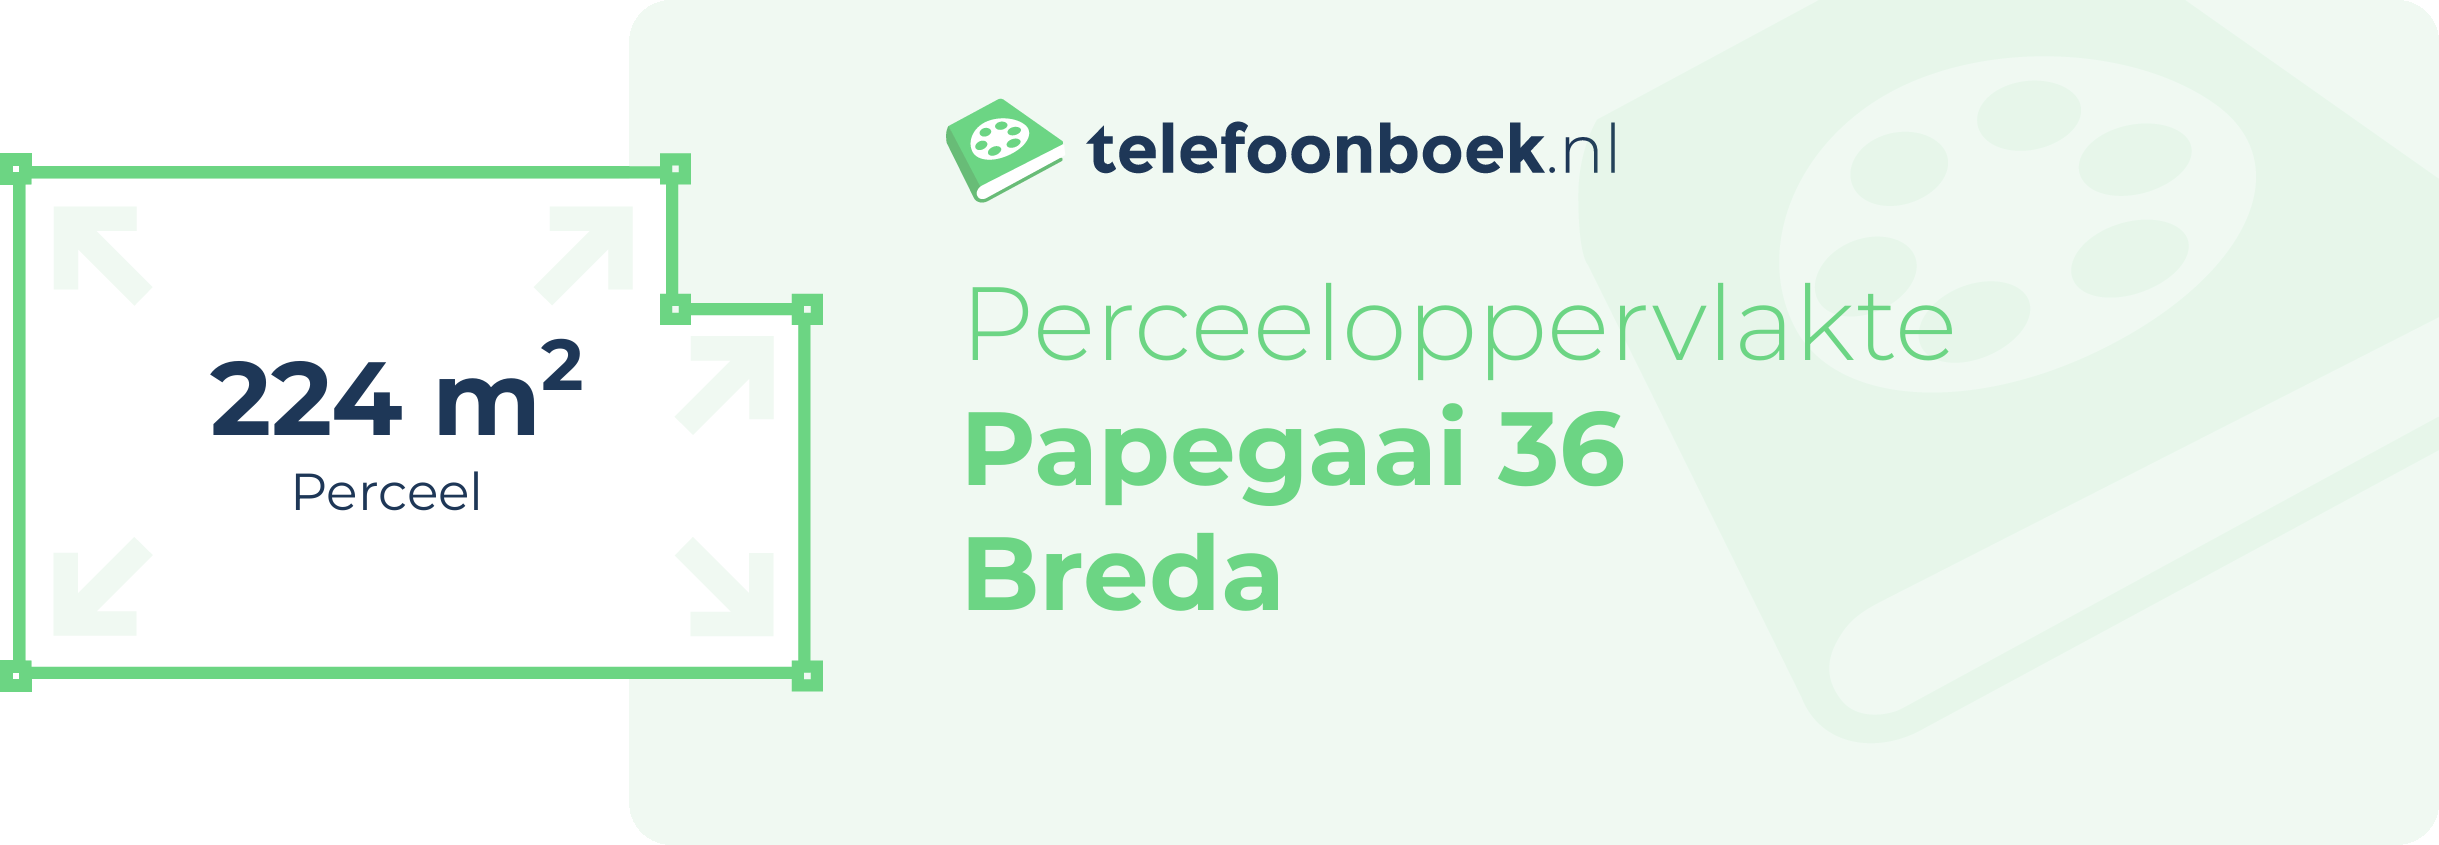 Perceeloppervlakte Papegaai 36 Breda